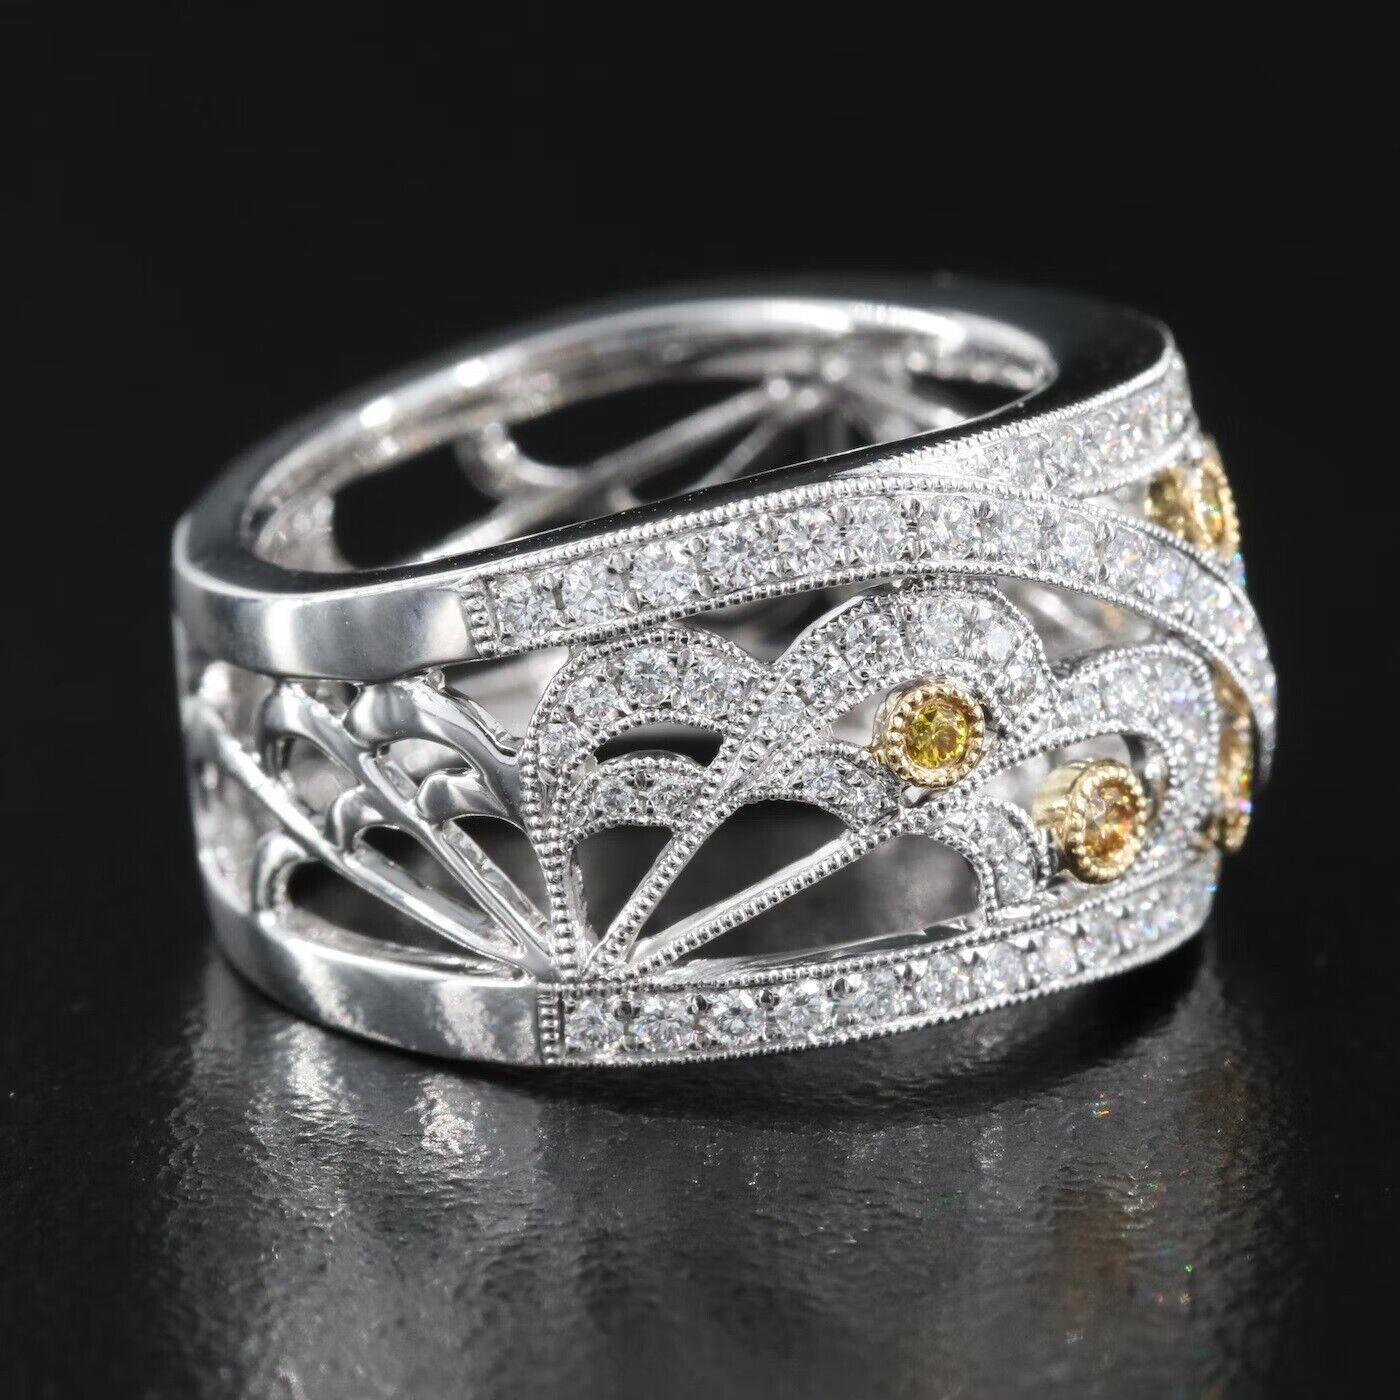 Round Cut $9500 / New / Jye’s Designer 1.03 Ct Diamond Ring / 18K White Gold / Super Fancy For Sale